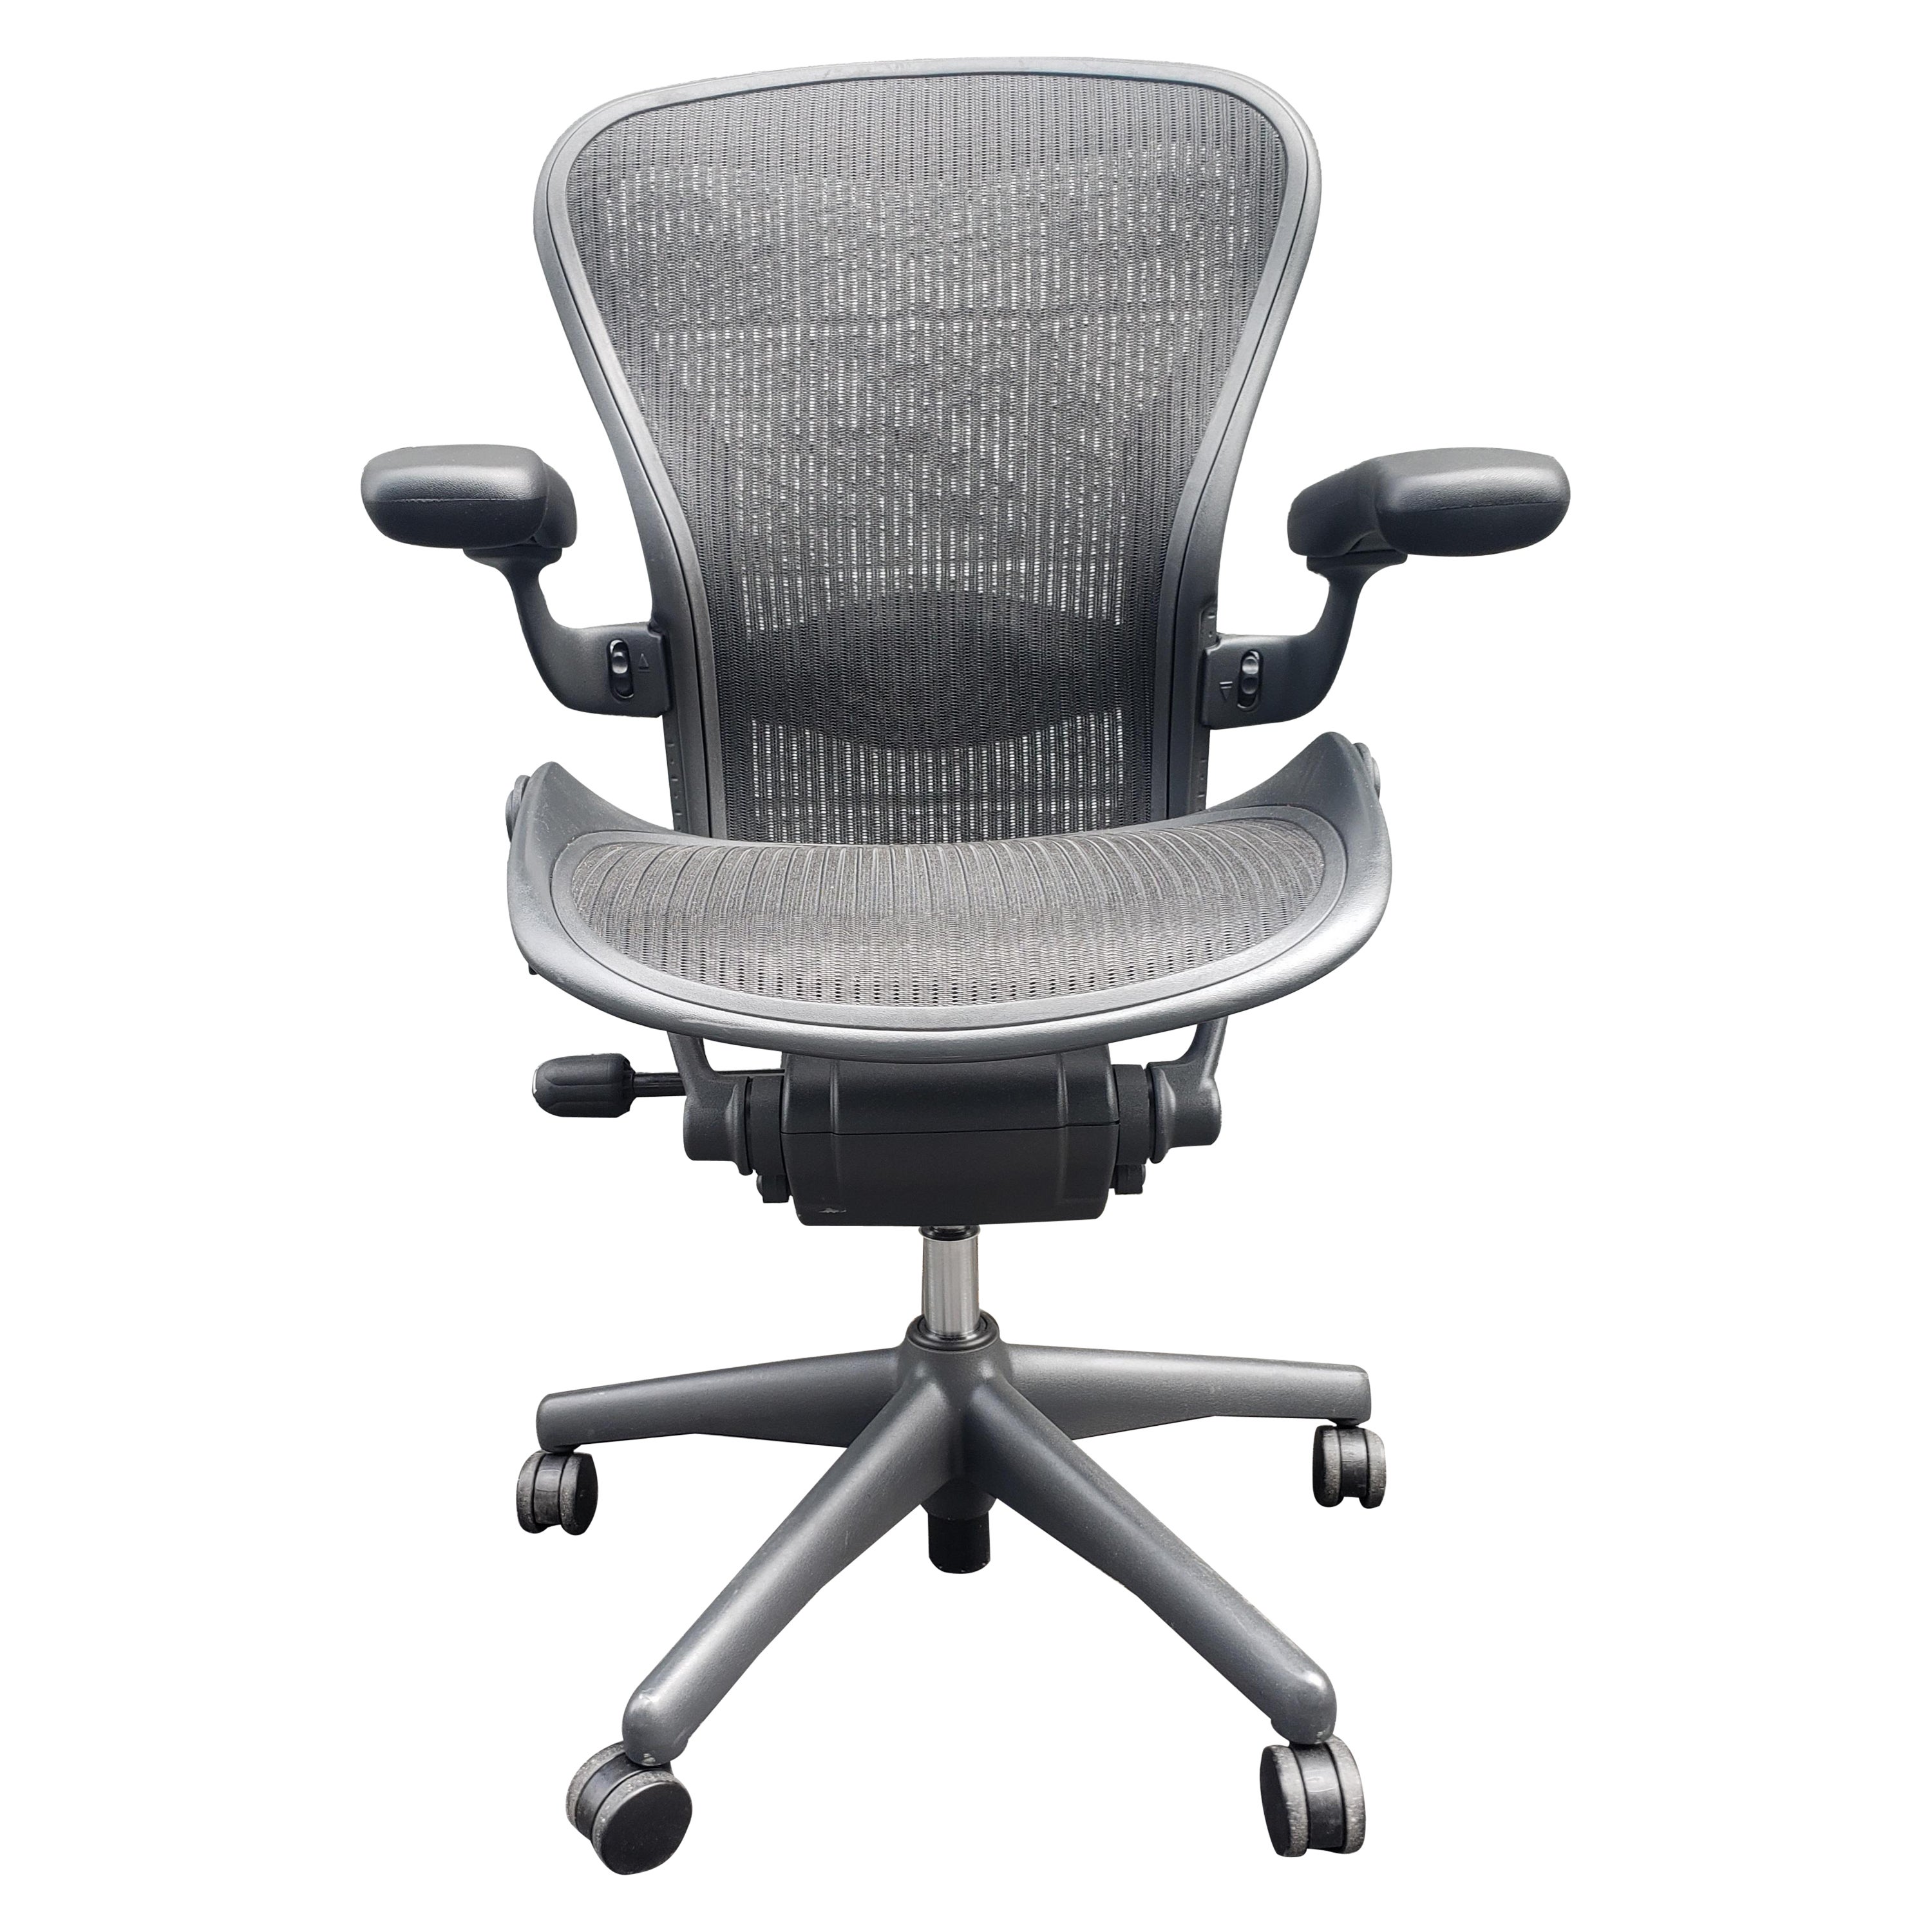 Original Herman Miller Fully Adjustable Classic Aeron Chair For Sale